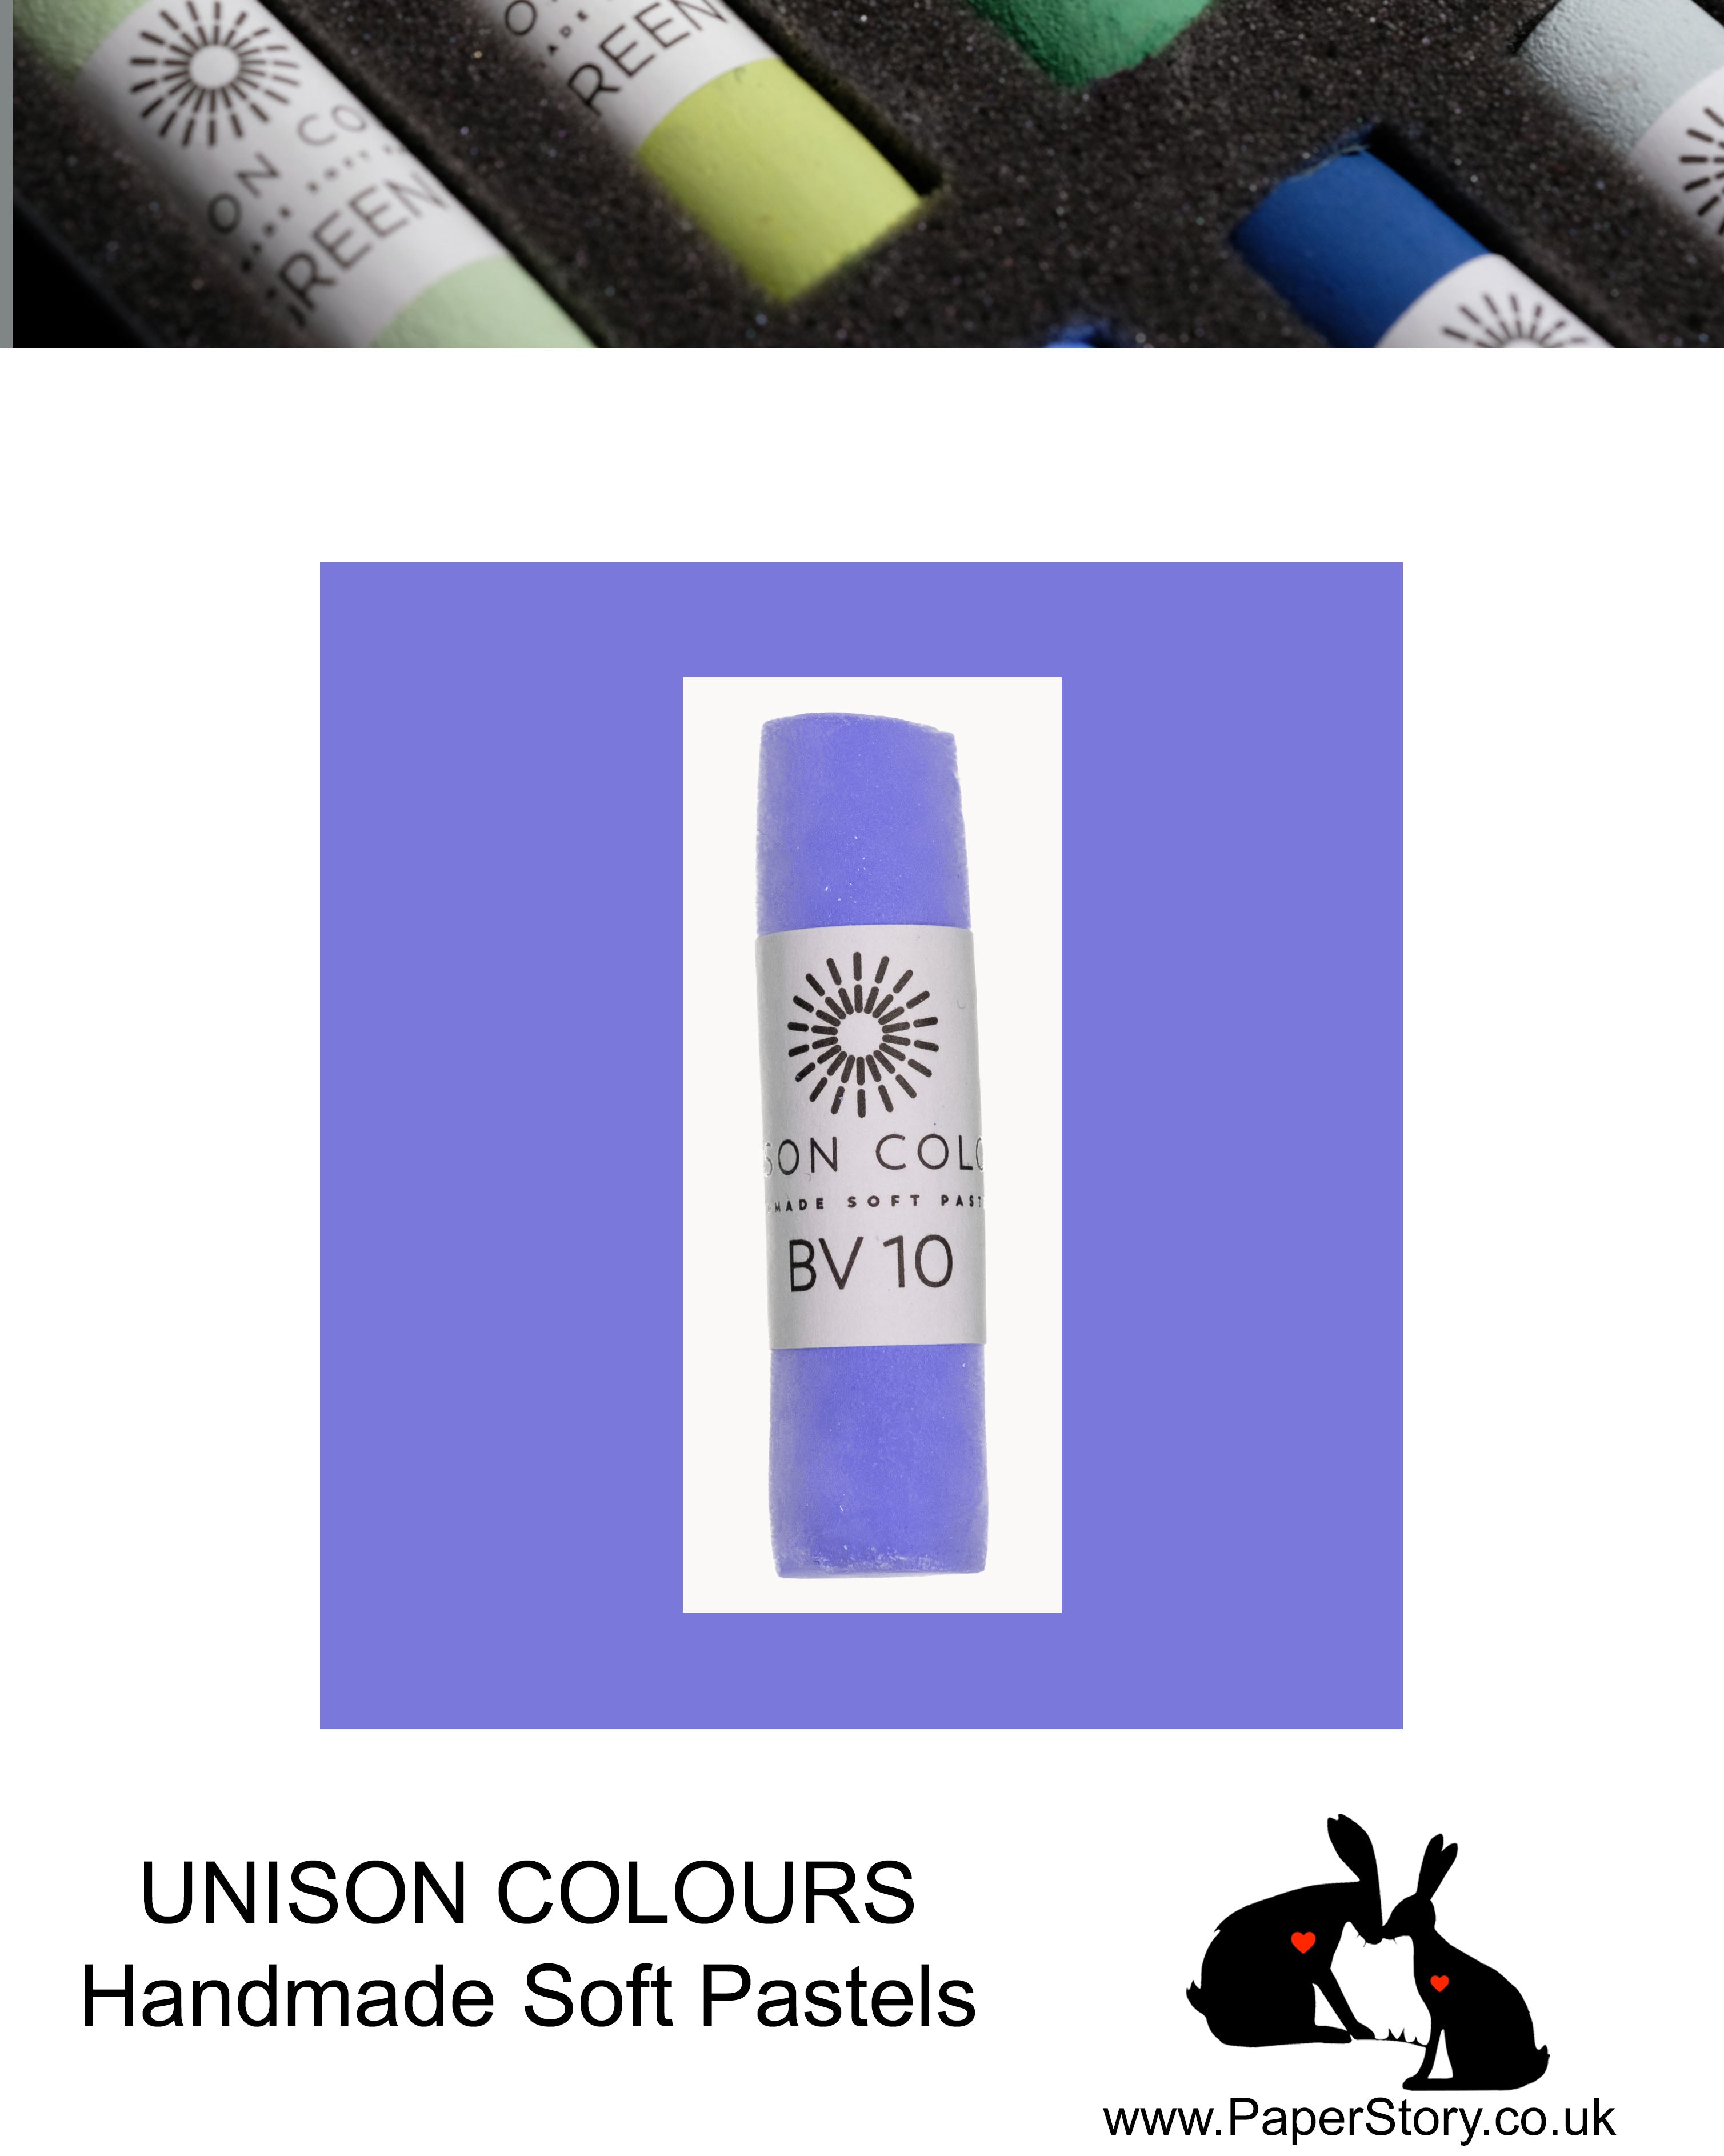 Unison Colour Handmade Soft Pastels Blue Violet 10 - Size Regular